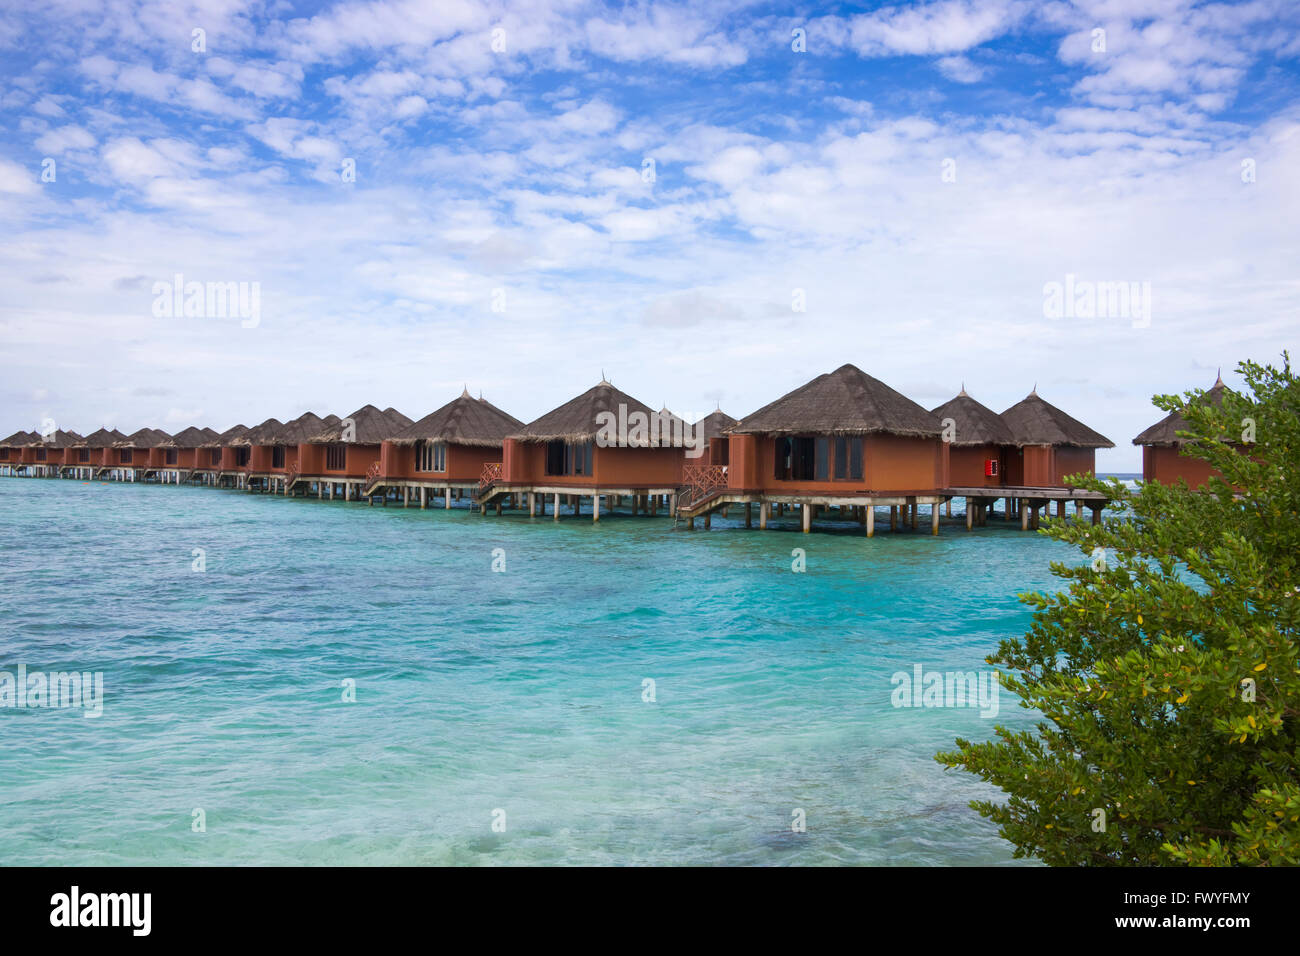 Resort on the ocean, Maldives Stock Photo